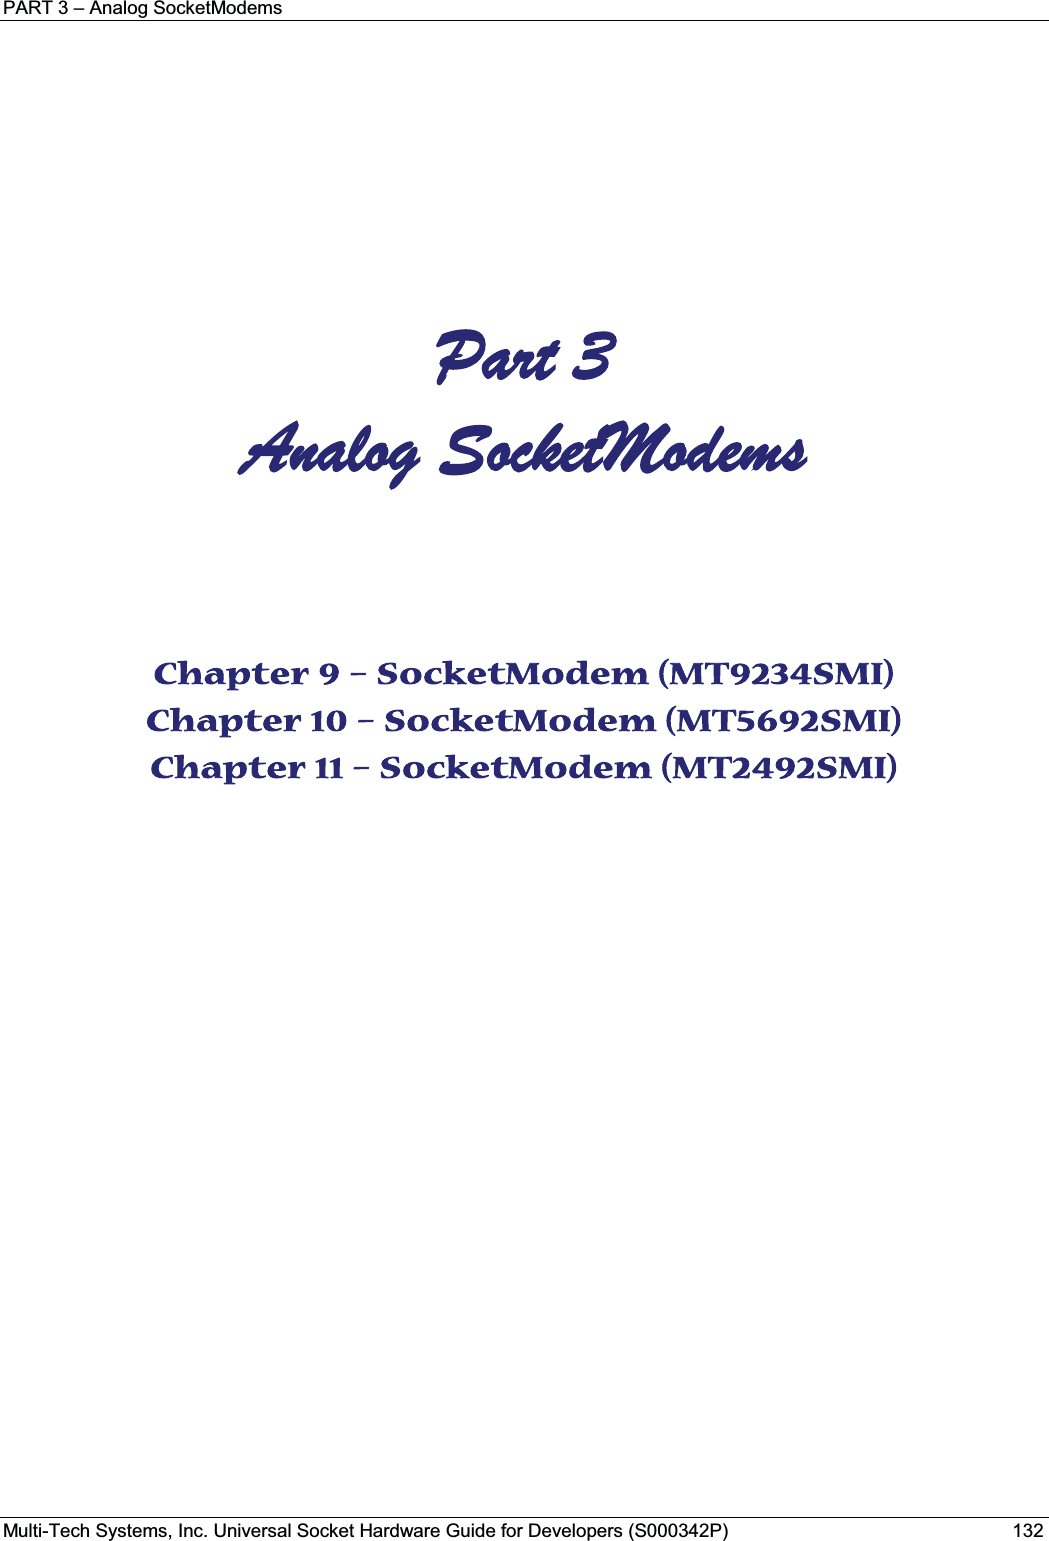 PART 3 – Analog SocketModemsMulti-Tech Systems, Inc. Universal Socket Hardware Guide for Developers (S000342P) 132     Part 3 Analog SocketModems   Chapter 9 – SocketModem (MT9234SMI) Chapter 10 – SocketModem (MT5692SMI) Chapter 11 – SocketModem (MT2492SMI)    